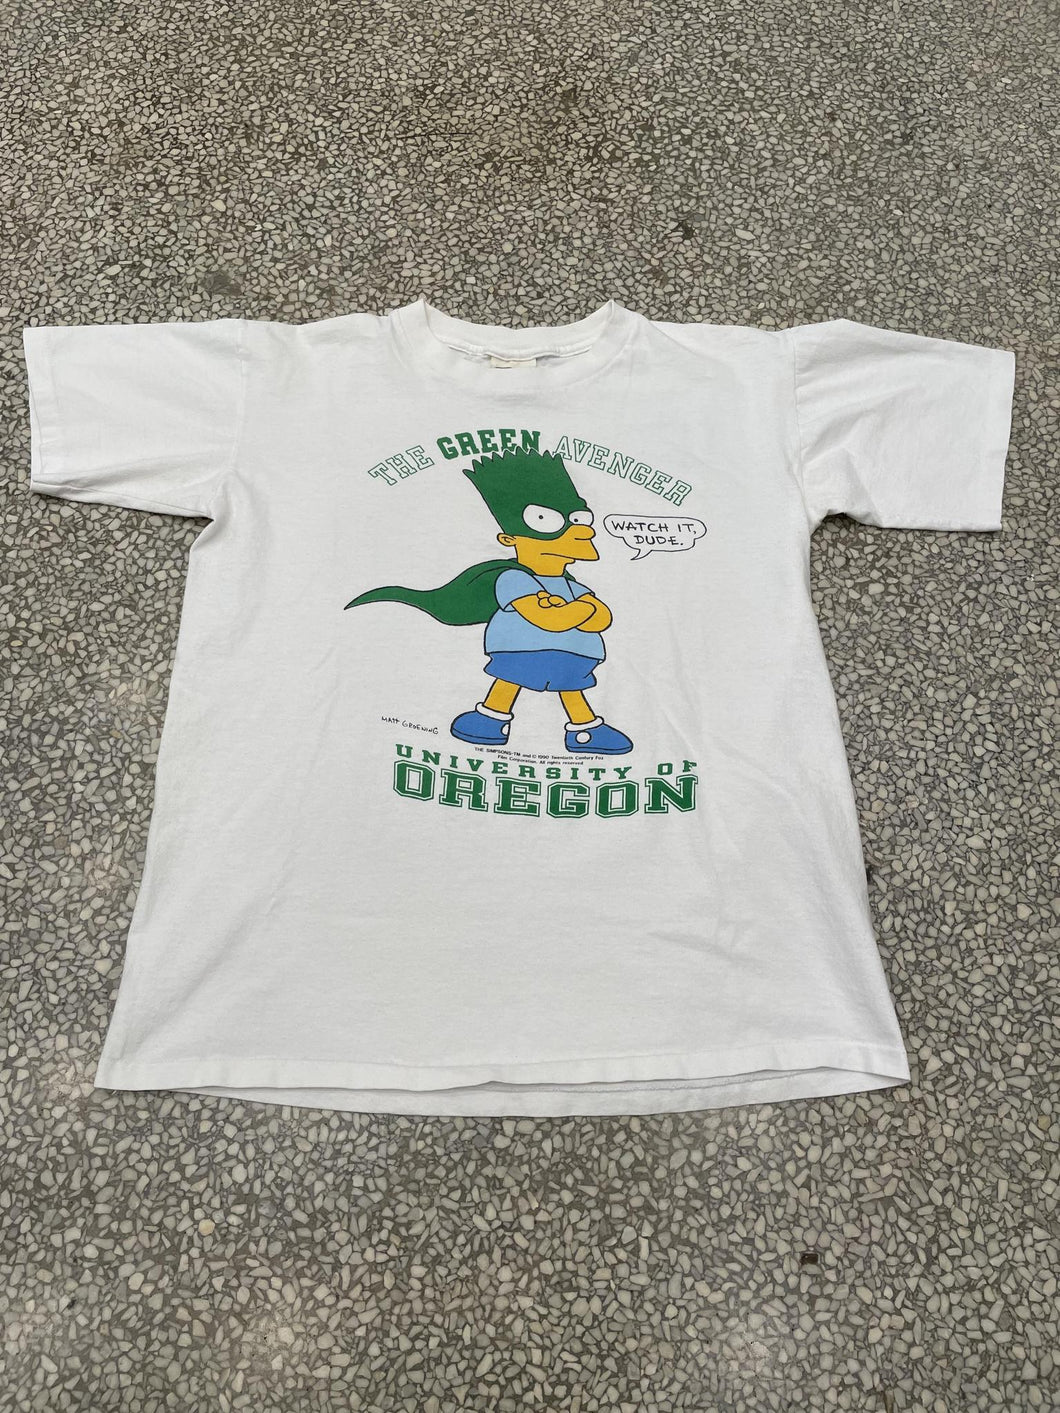 Oregon Vintage 1990 Green Avenger Bart Simpson ABC Vintage 